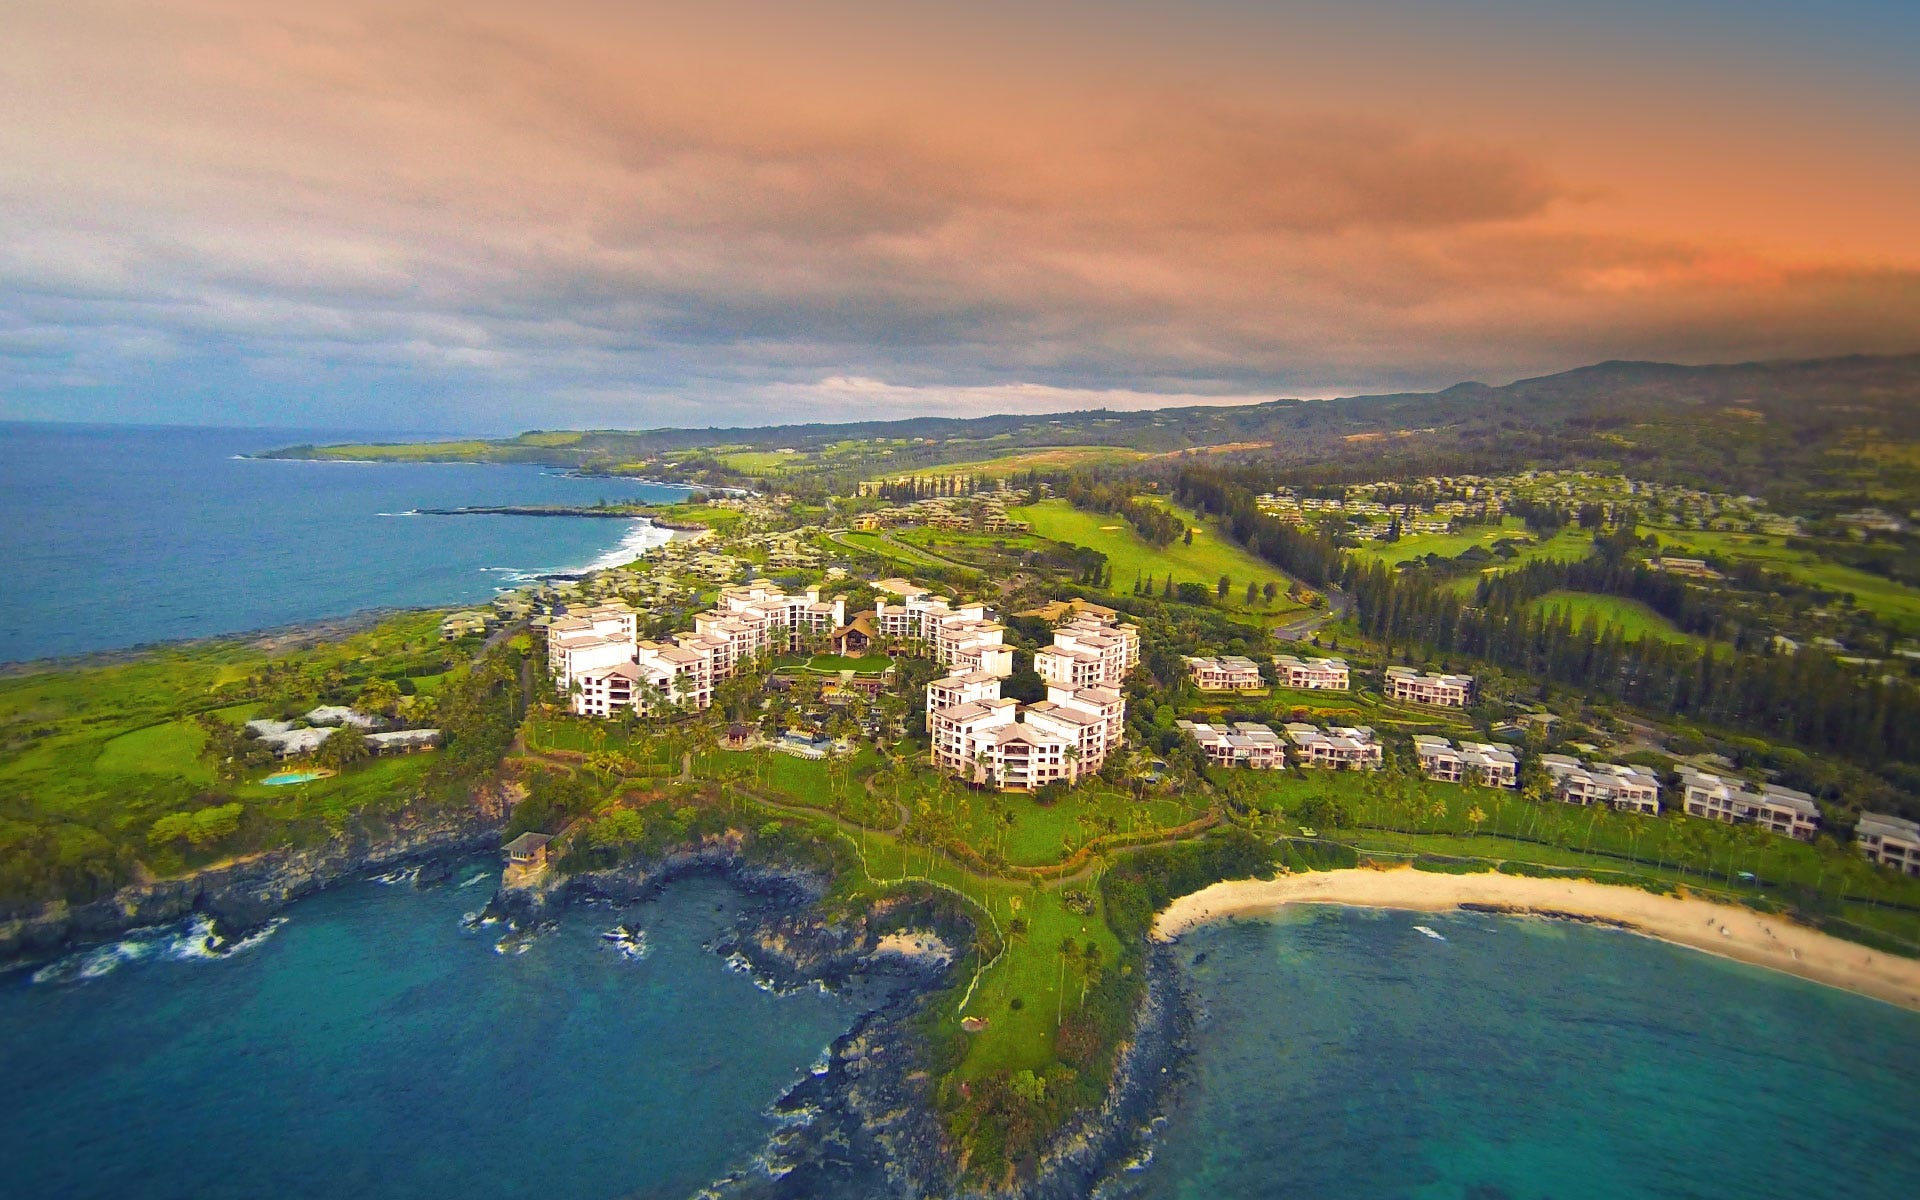 Luxury Travel Rejuvenation awaits in Kapalua Bay, Hawaii